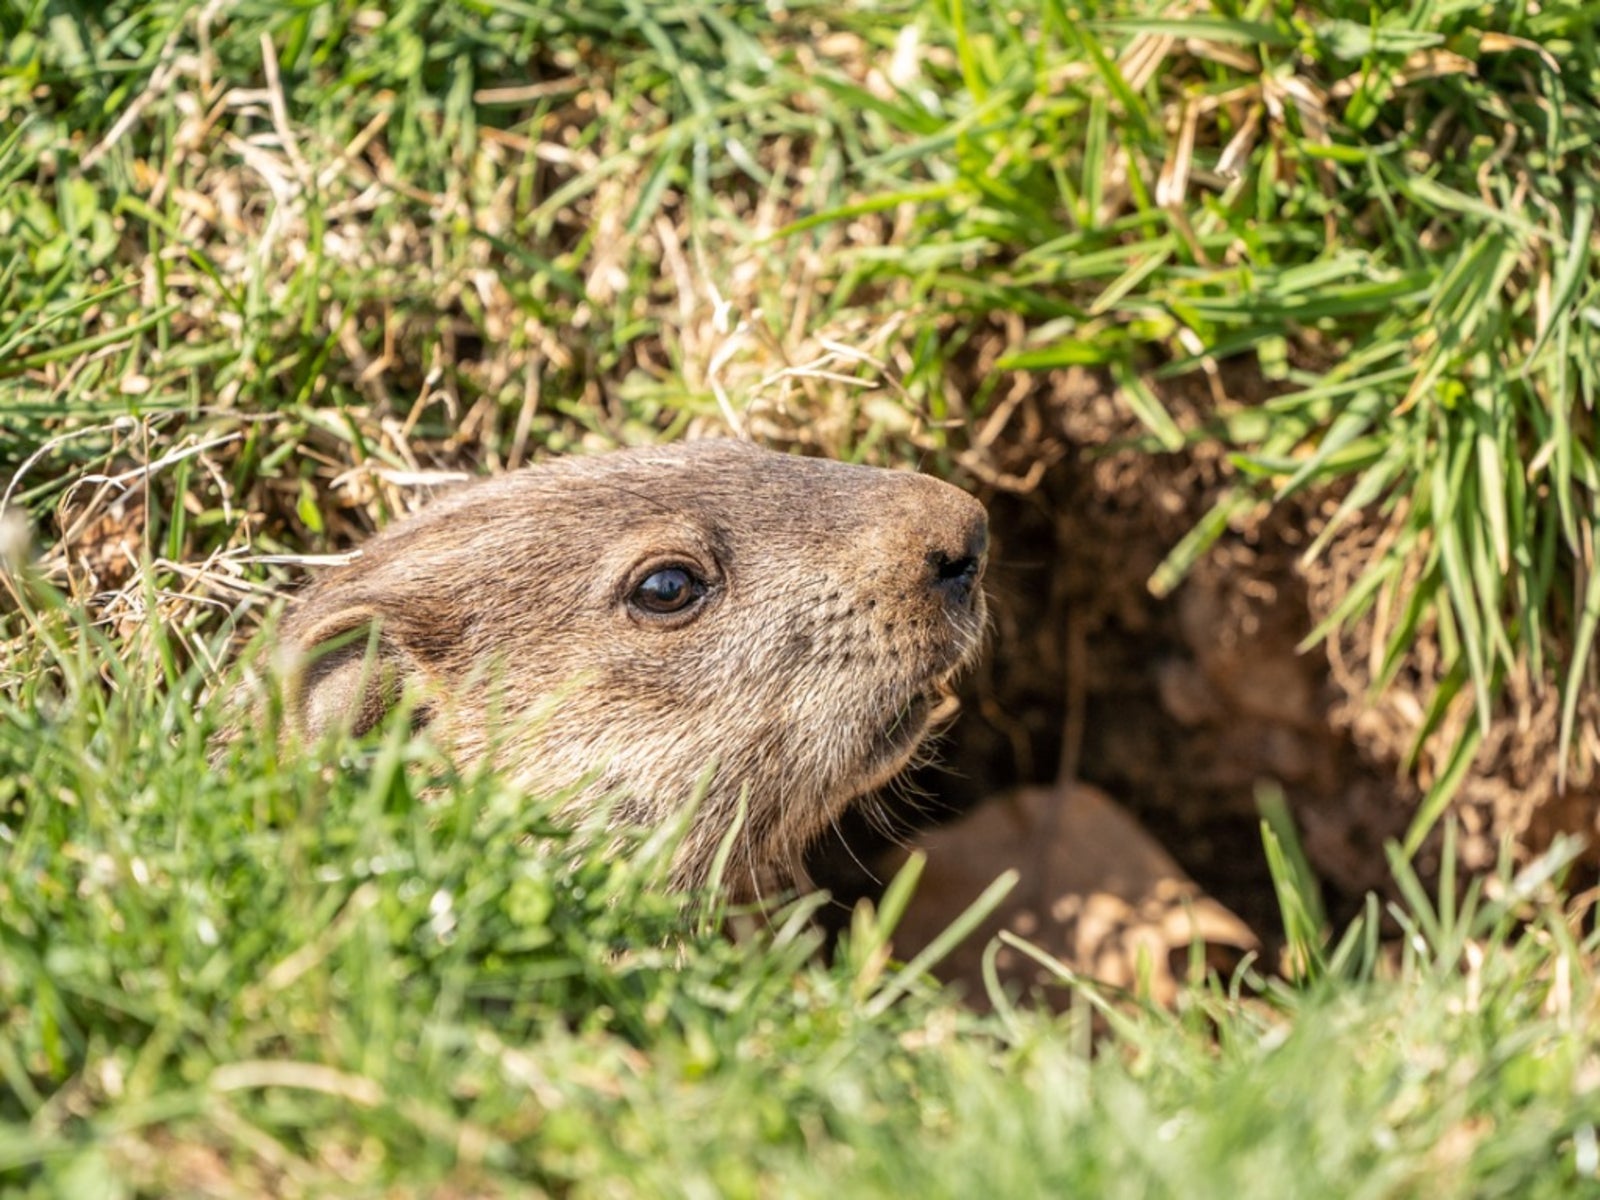 groundhog peeking out of his burrow